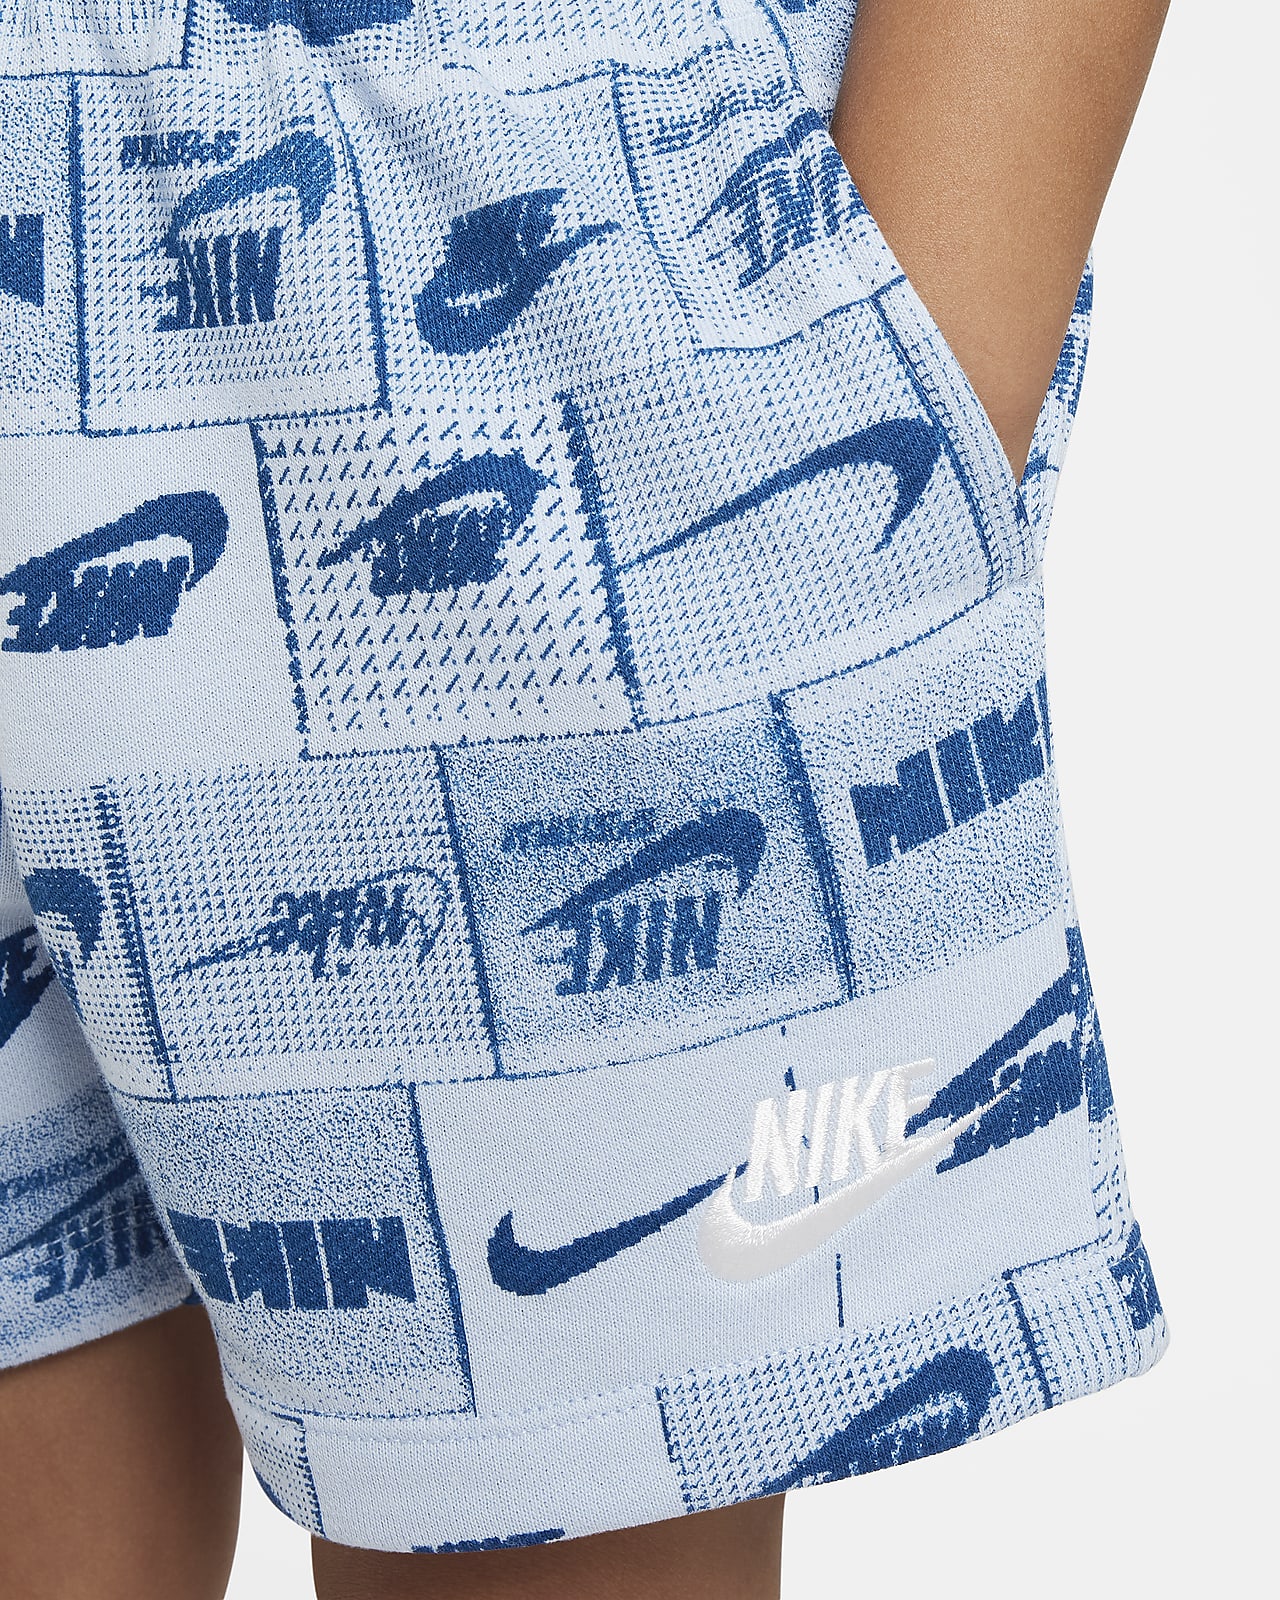 Shorts. Toddler Club Nike Printed Sportswear